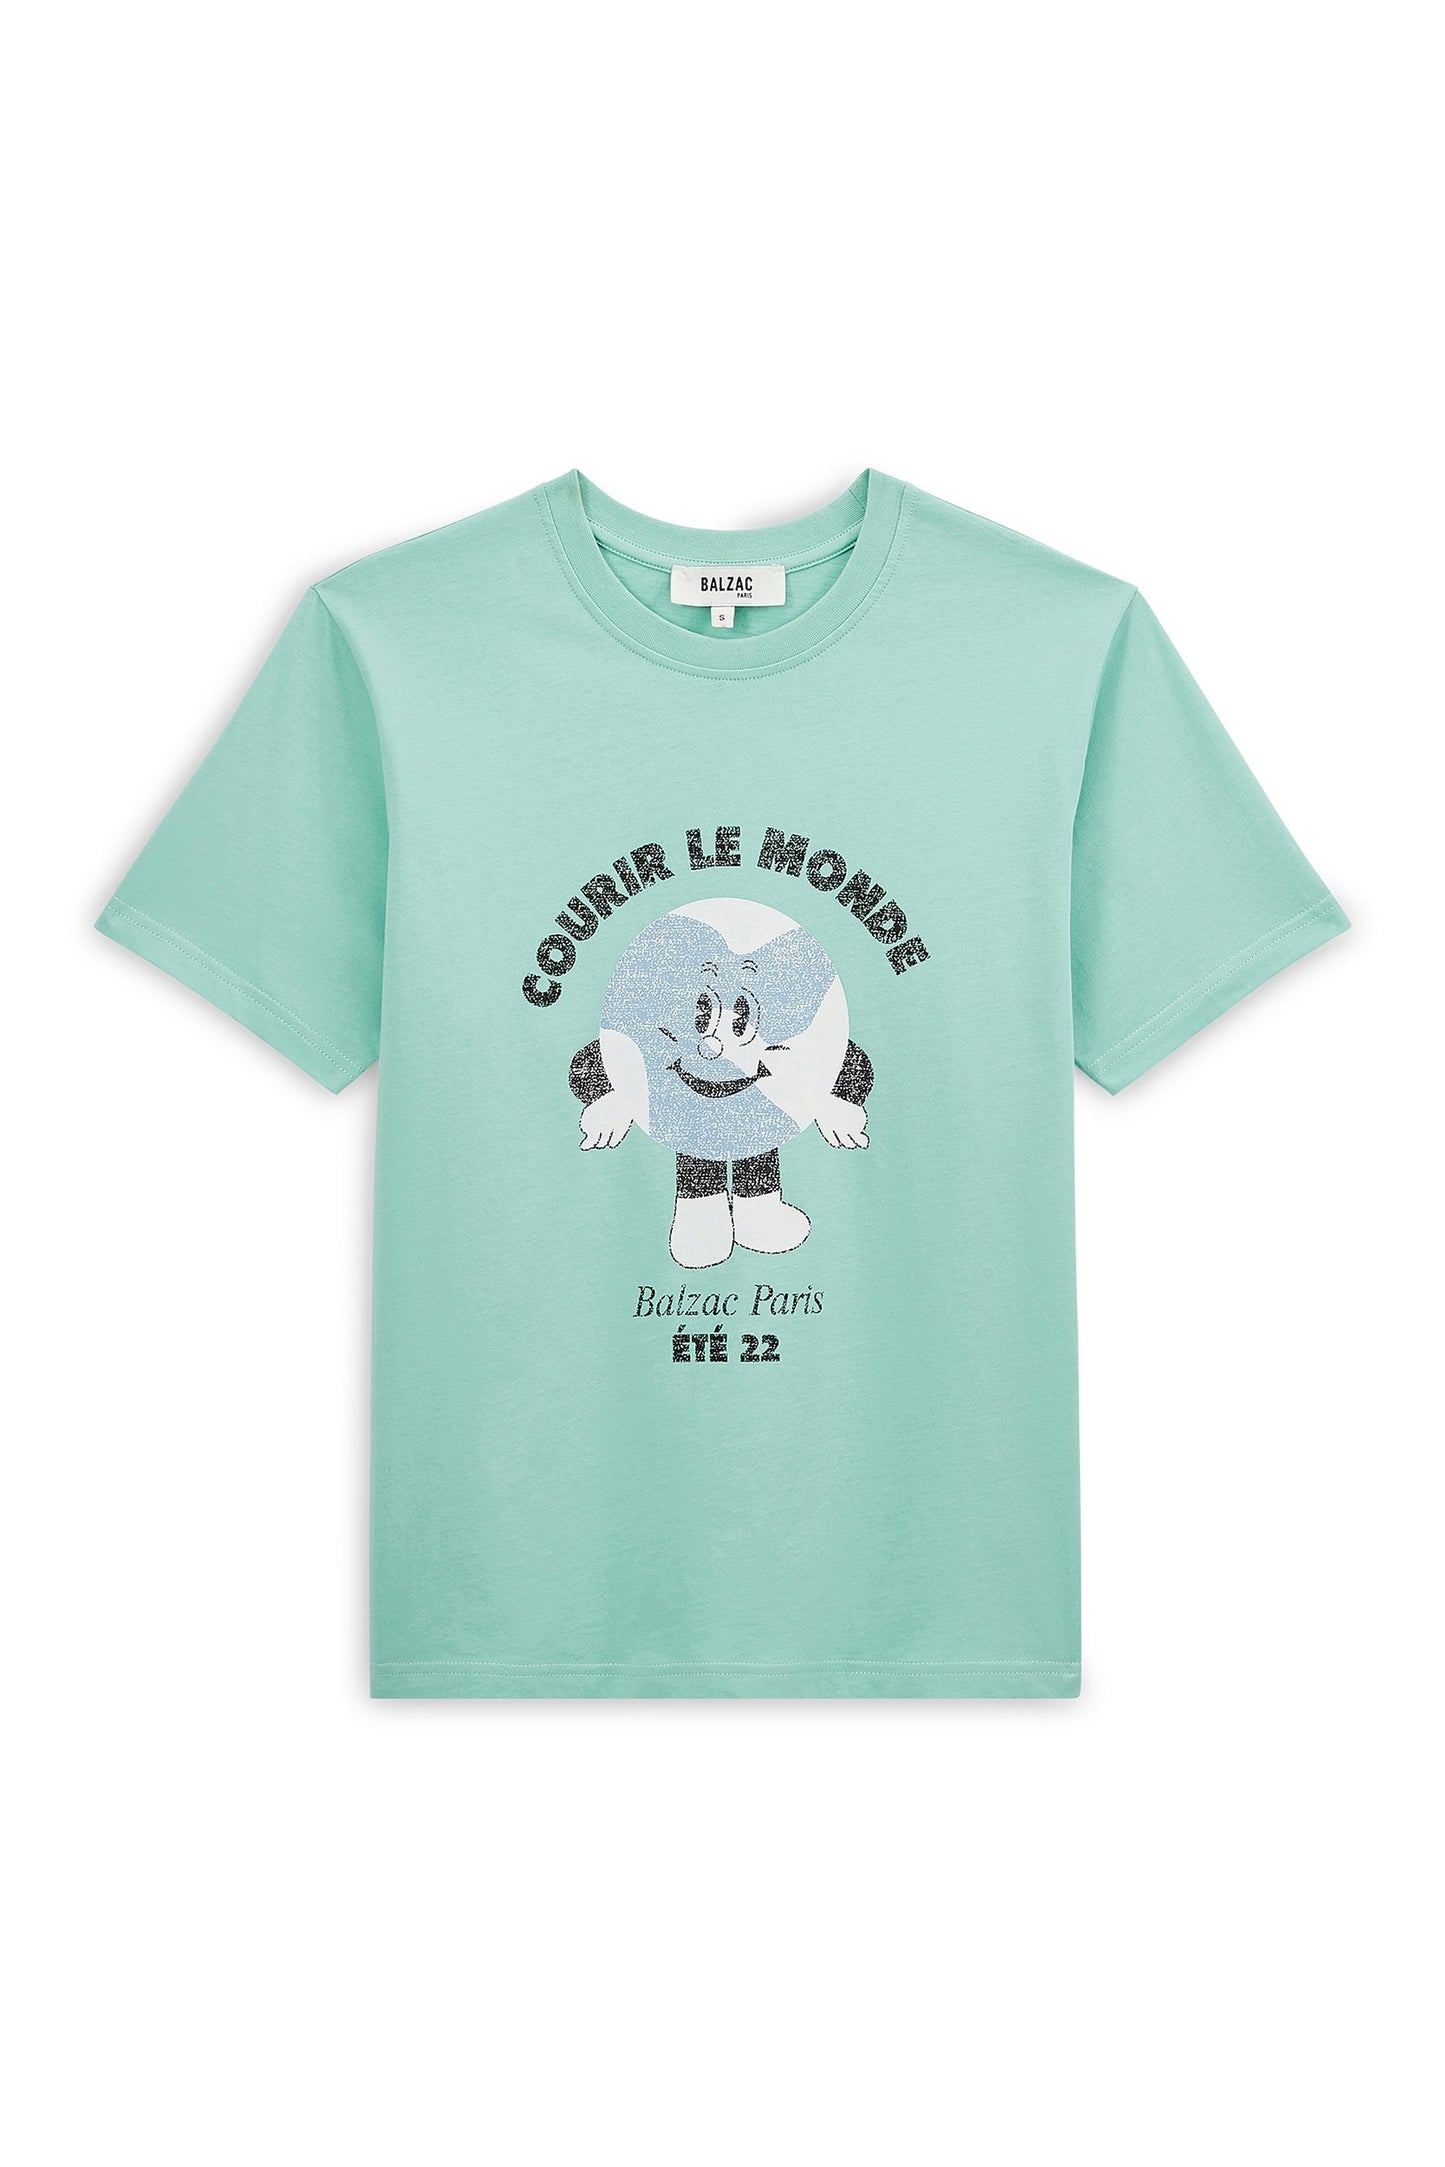 Tee-shirt Bree Courir le Monde vert